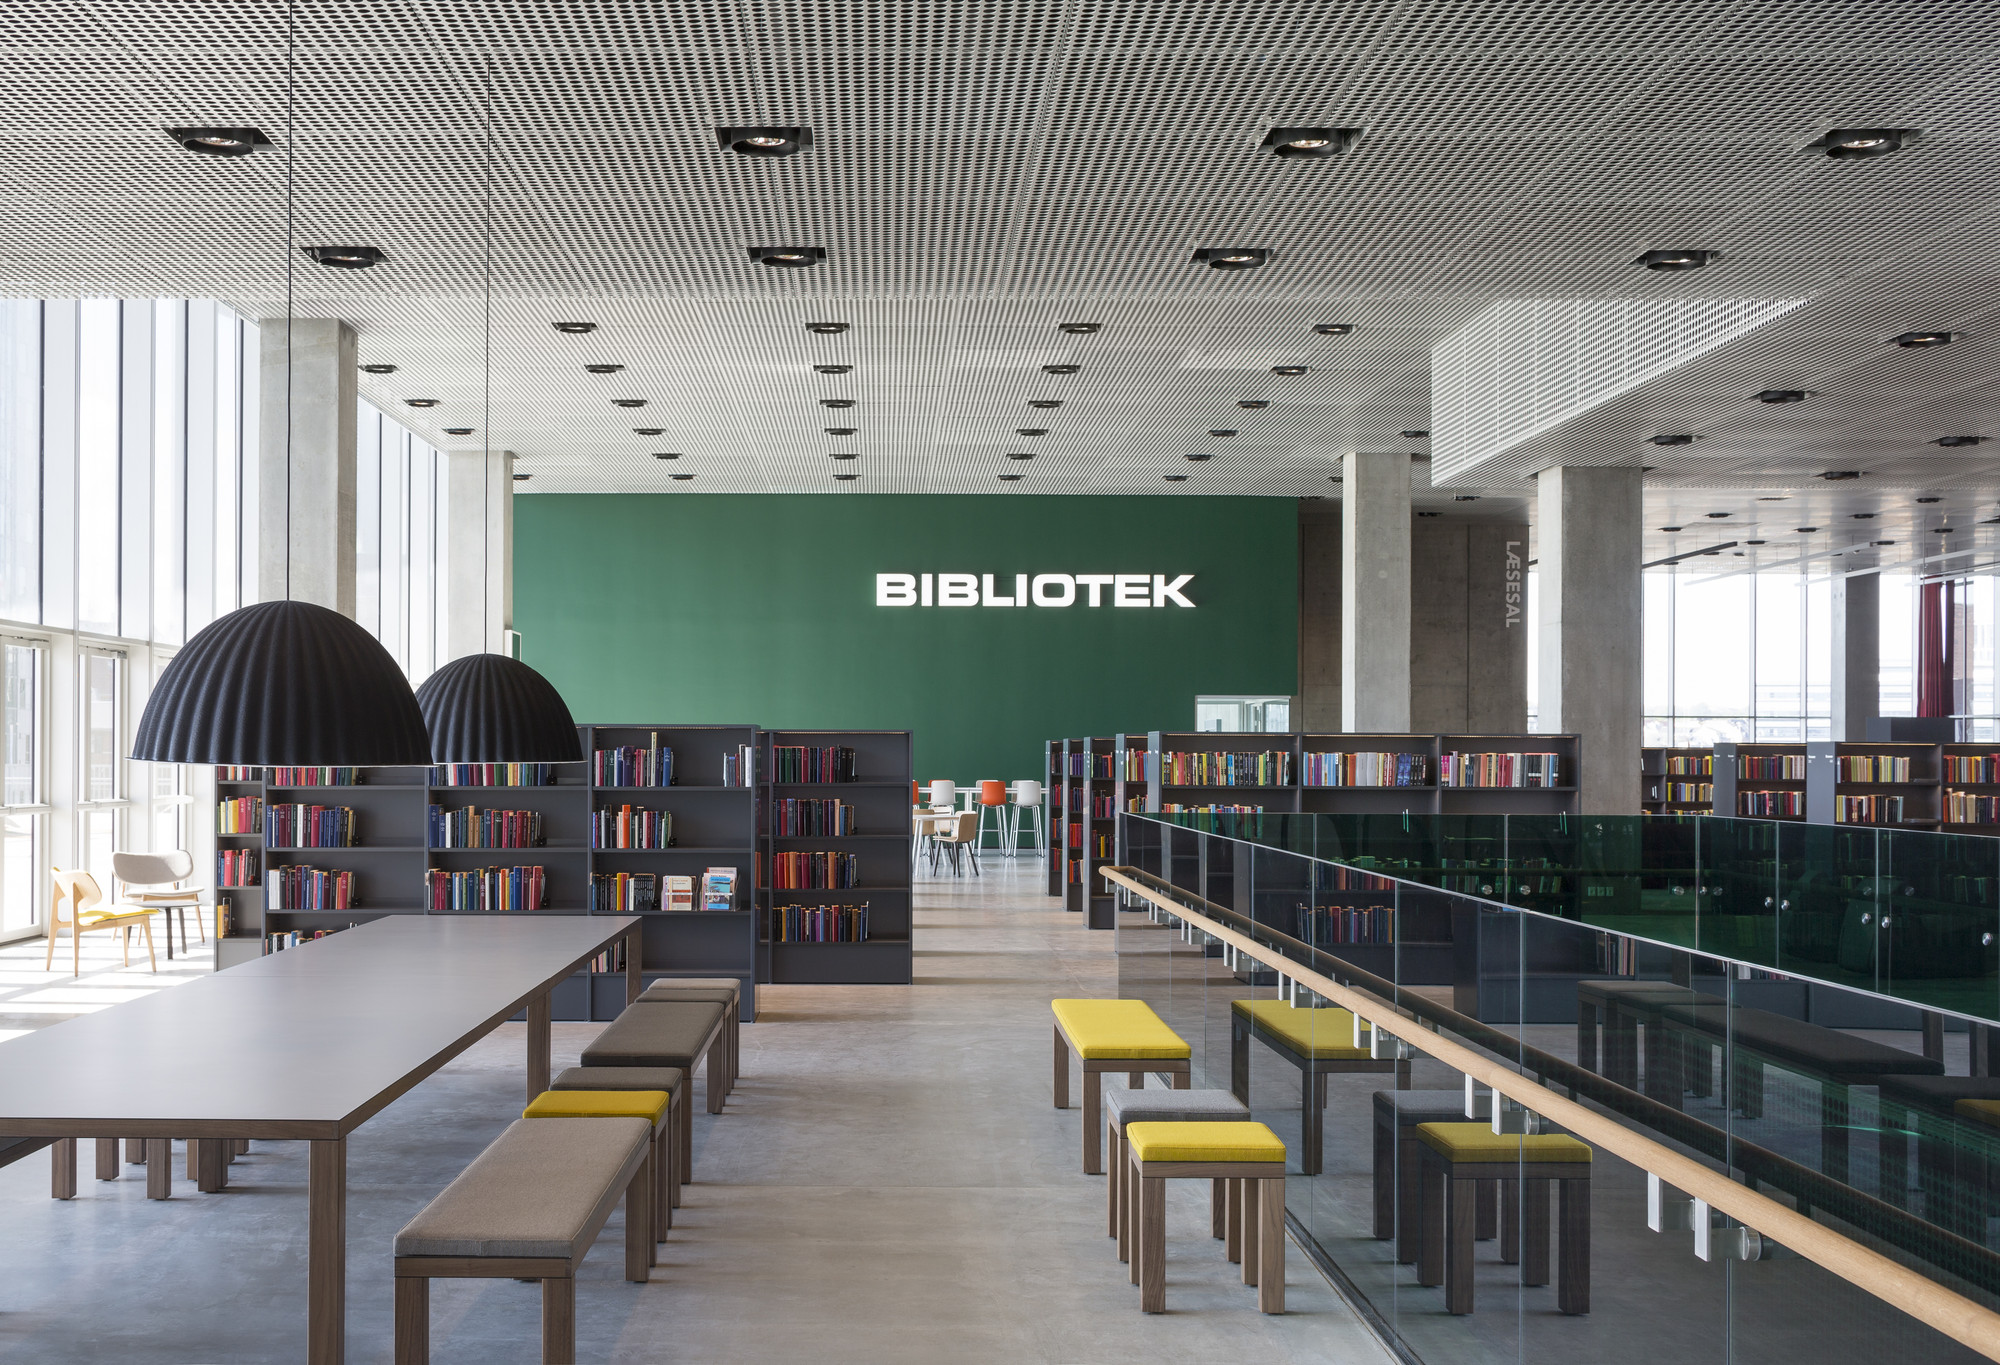 05-dokk-1-biblioteca-publica-do-ano-2016